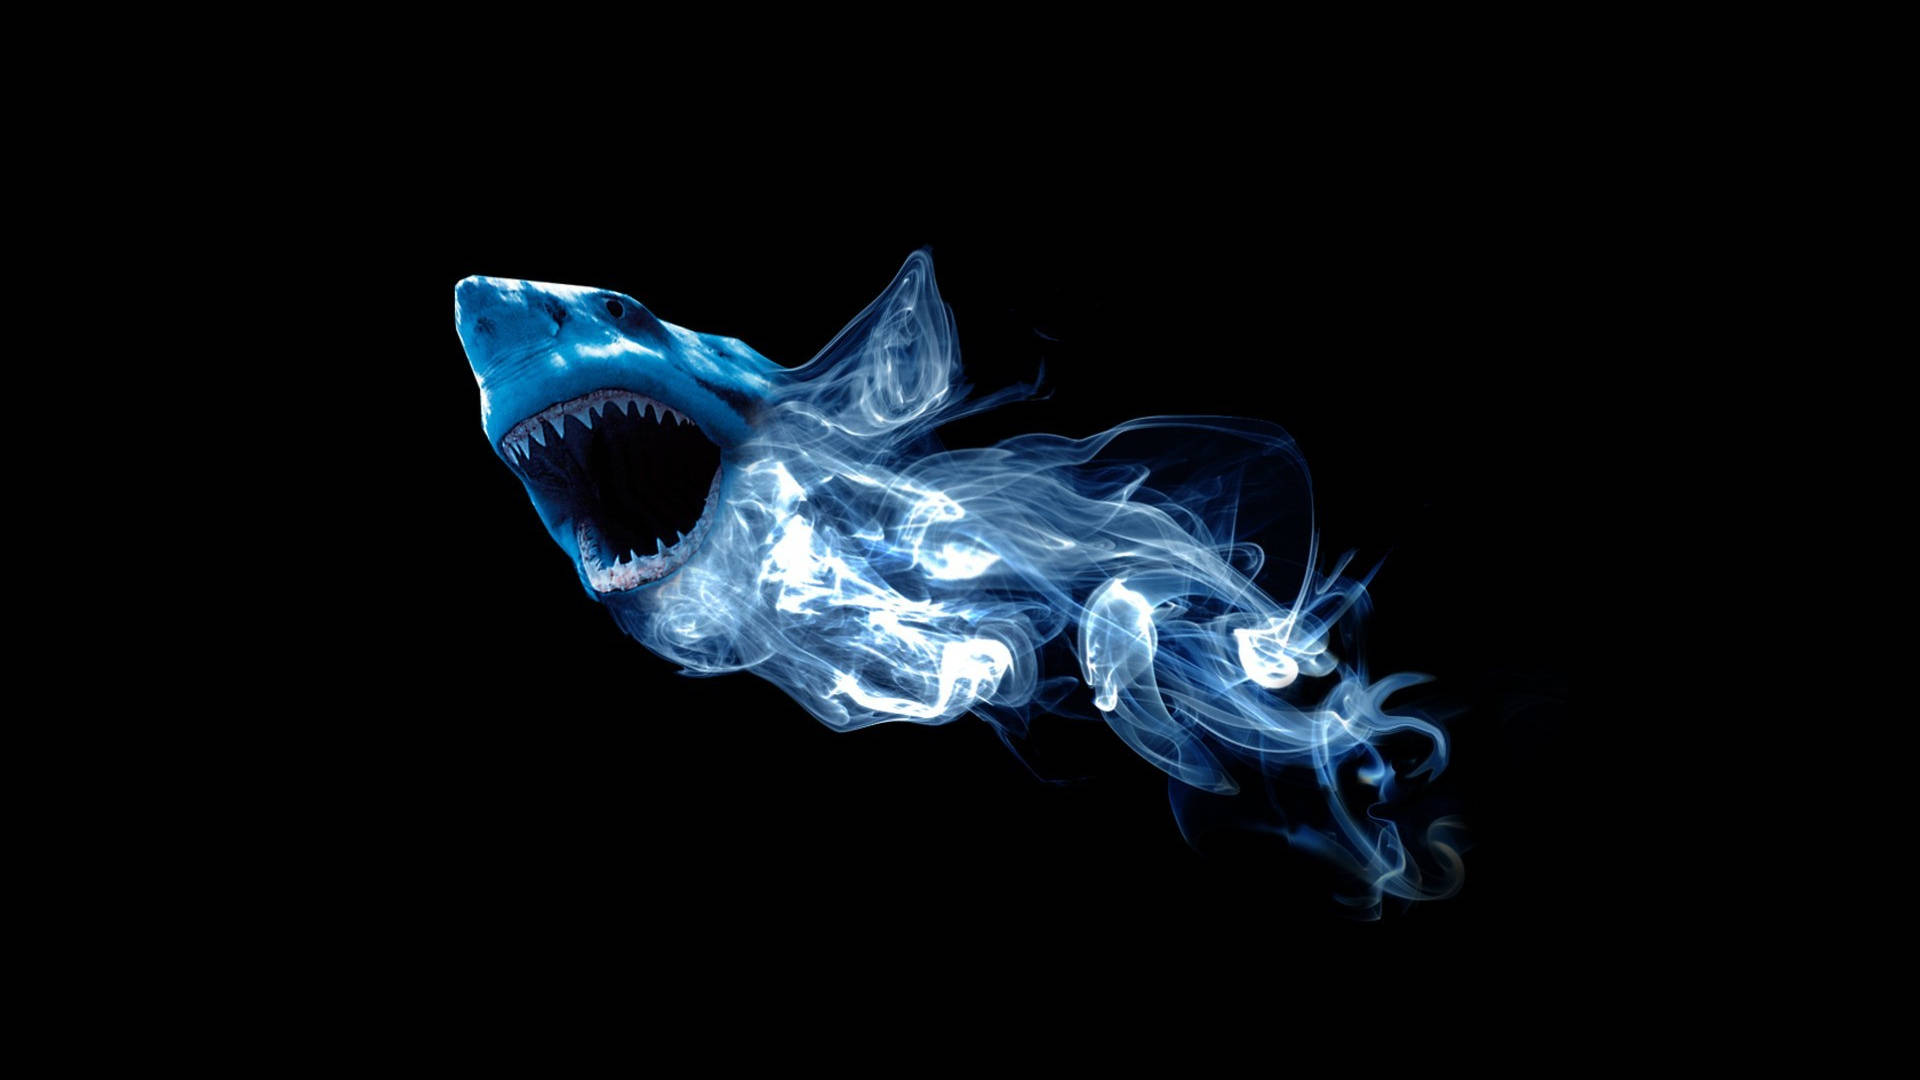 Cool Pictures Shark Digital Art Wallpaper